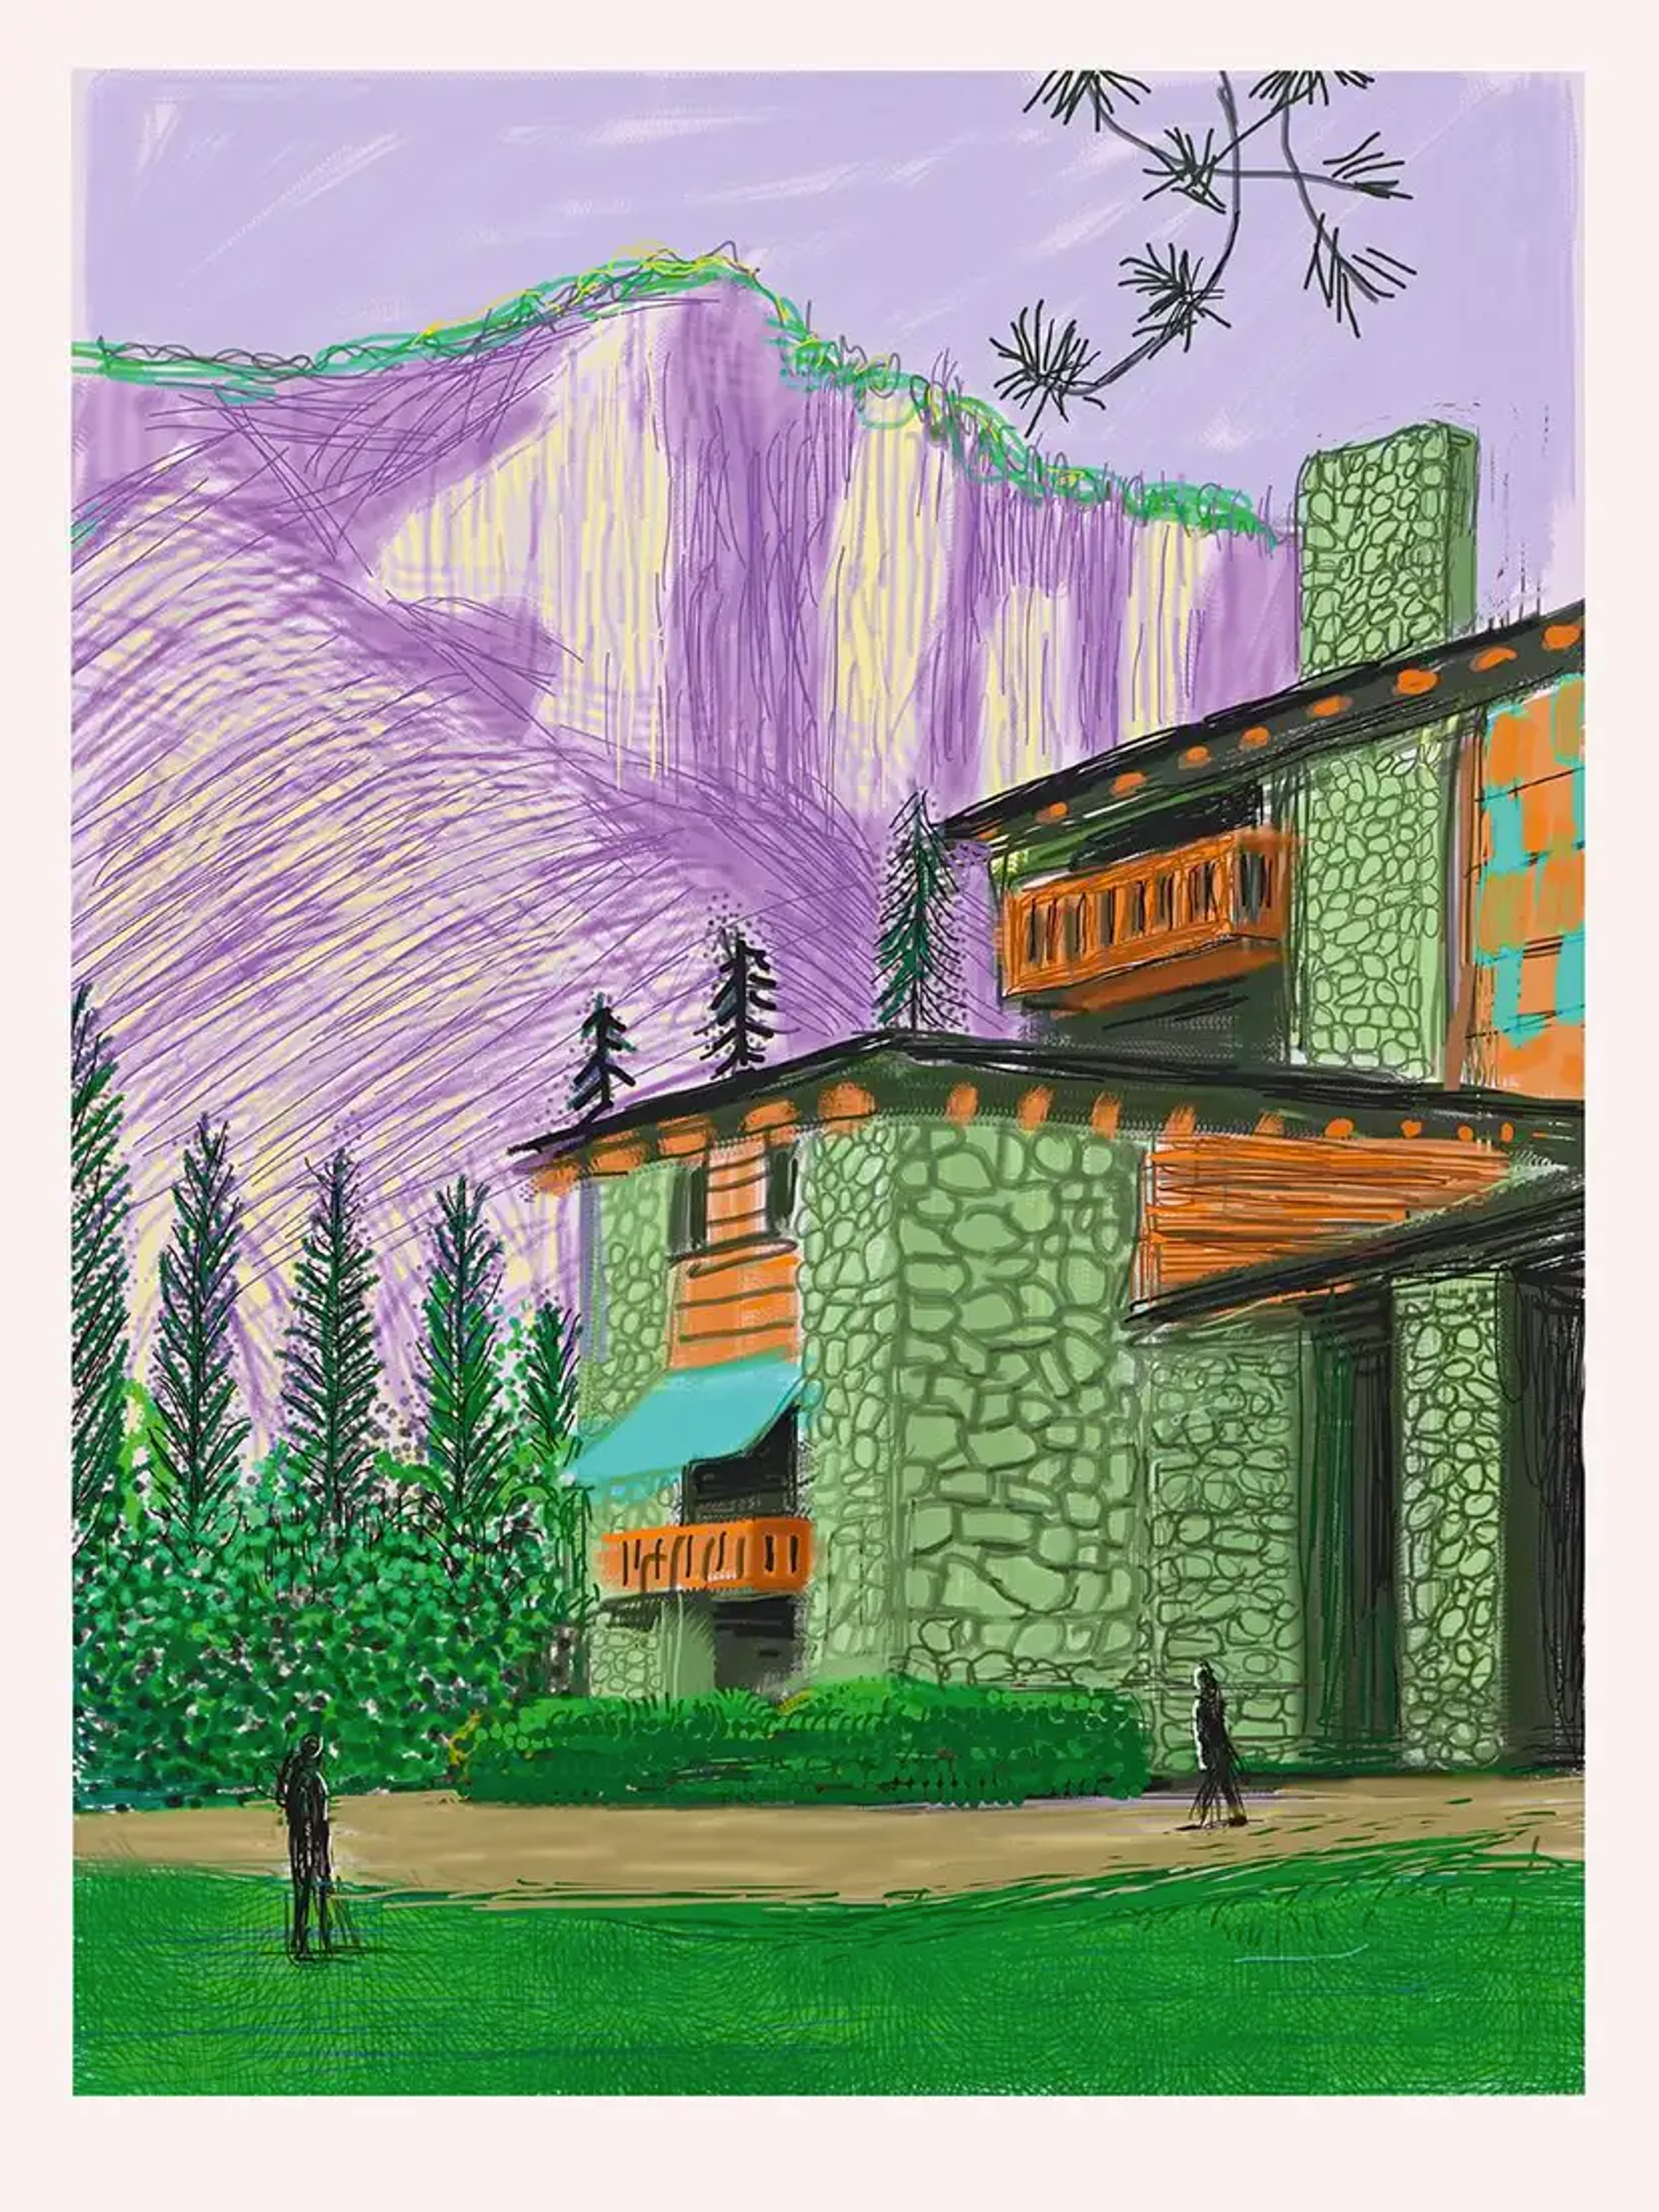 David Hockney's Yosemite Suite